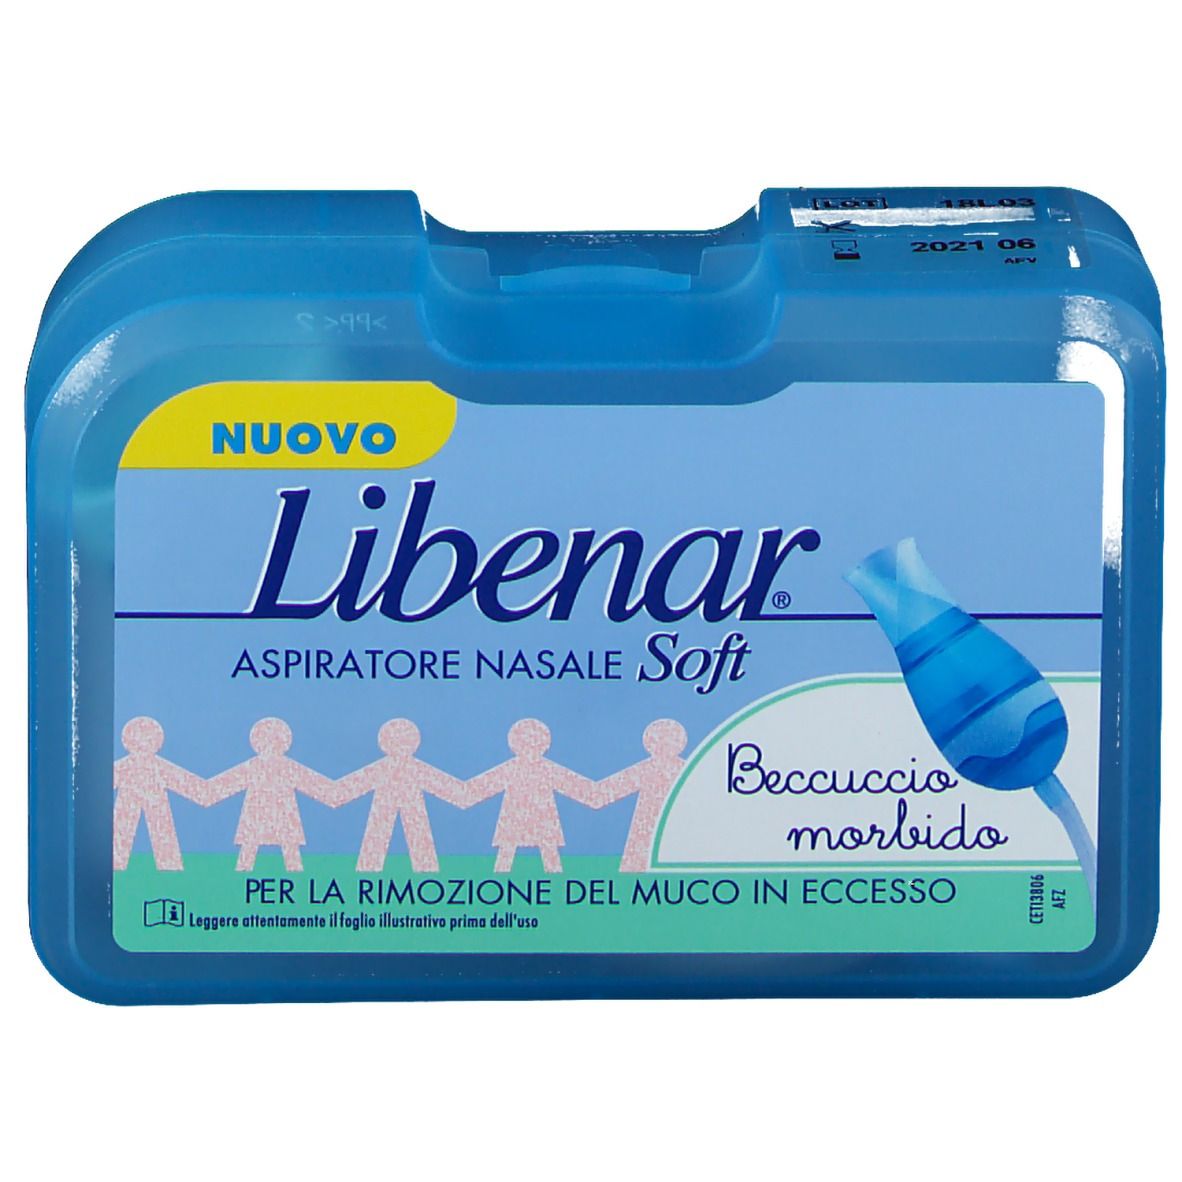 Libenar® Aspiratore Nasale Soft